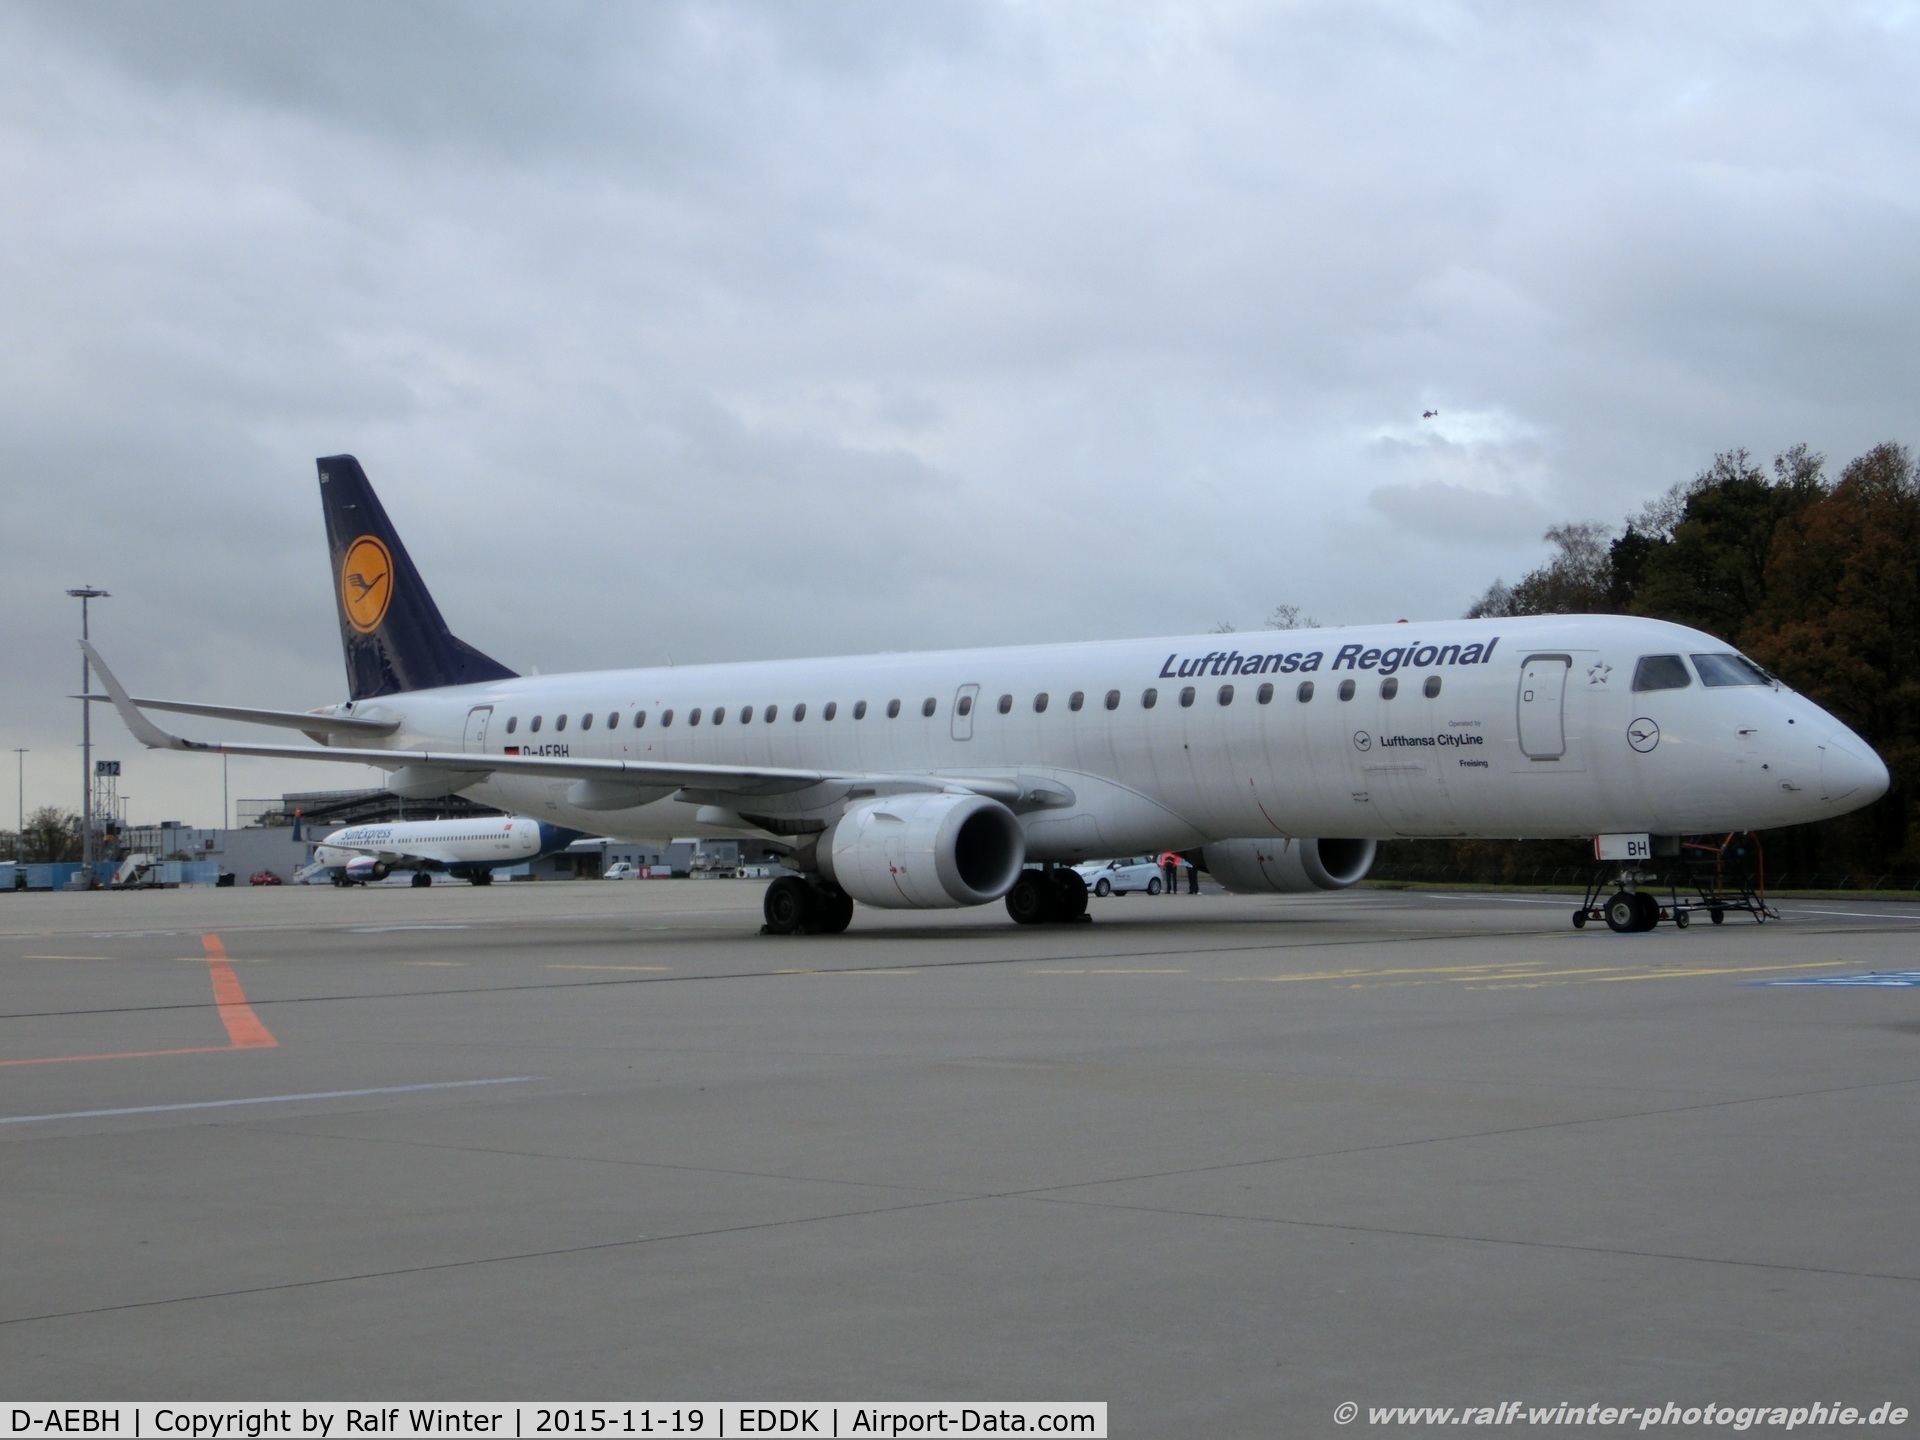 D-AEBH, 2011 Embraer 195LR (ERJ-190-200LR) C/N 19000447, Embraer ERJ-195LR 190-200LR - CL CLH Lufthansa Cityline - opf Lufthansa Regional 'Freising' - 19000447 - D-AEBH - 19.11.2015 - CGN